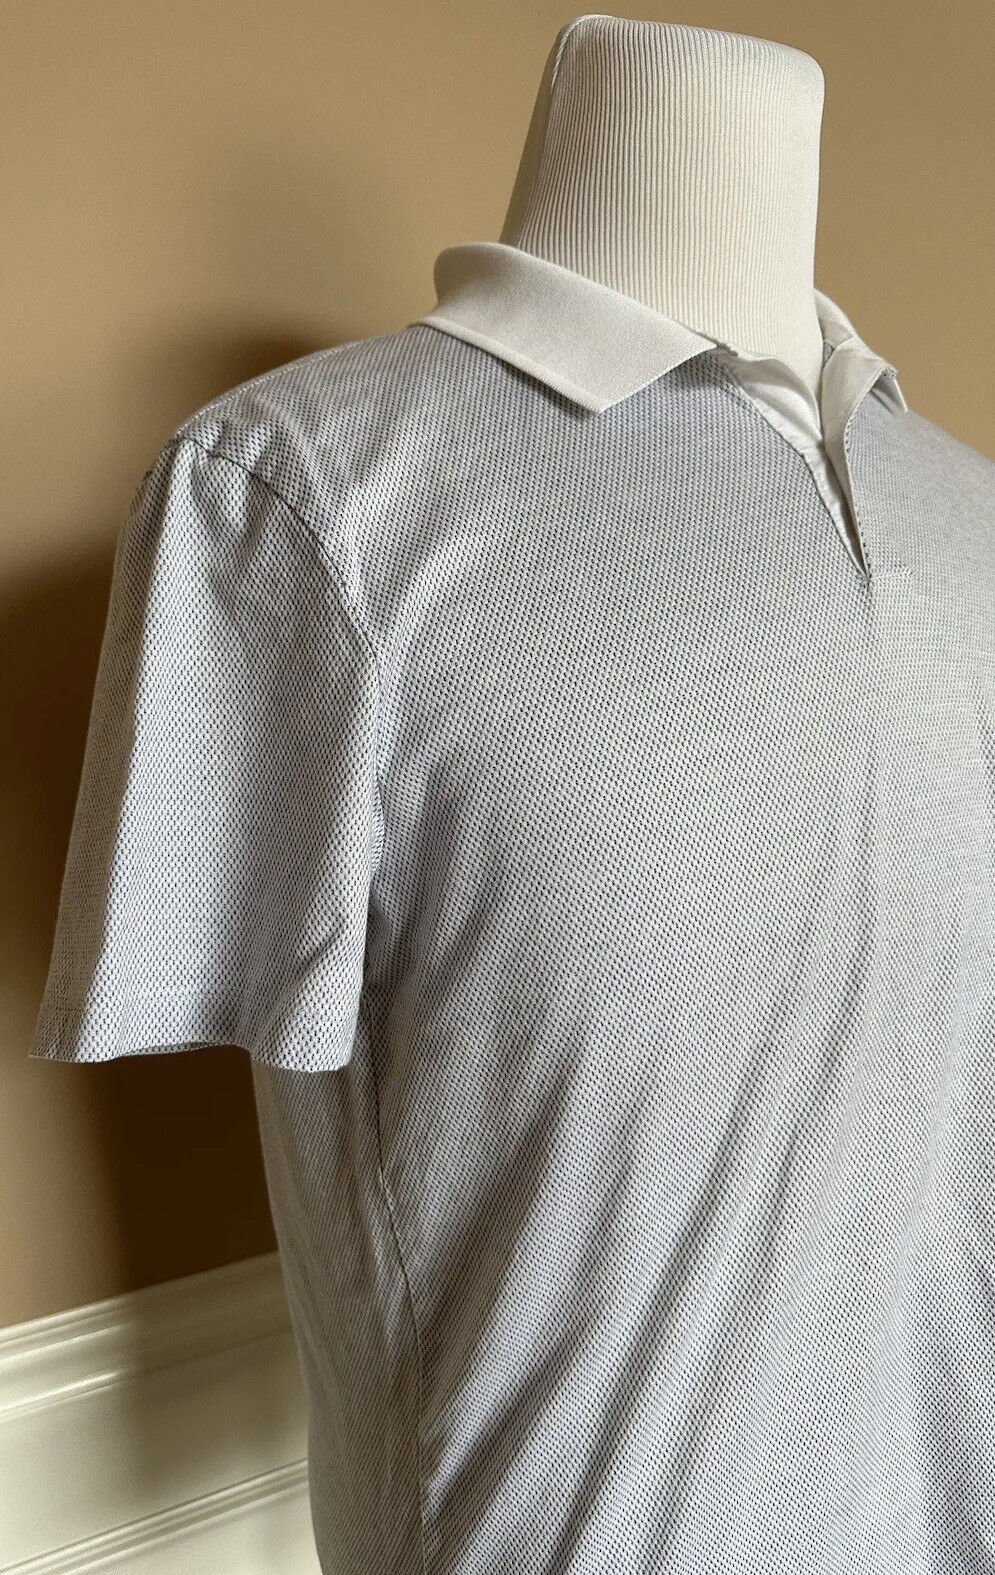 Boss Hugo Boss Black Label Whit/Blue Short Sleeve Polo Shirt L (Fits like S-M)